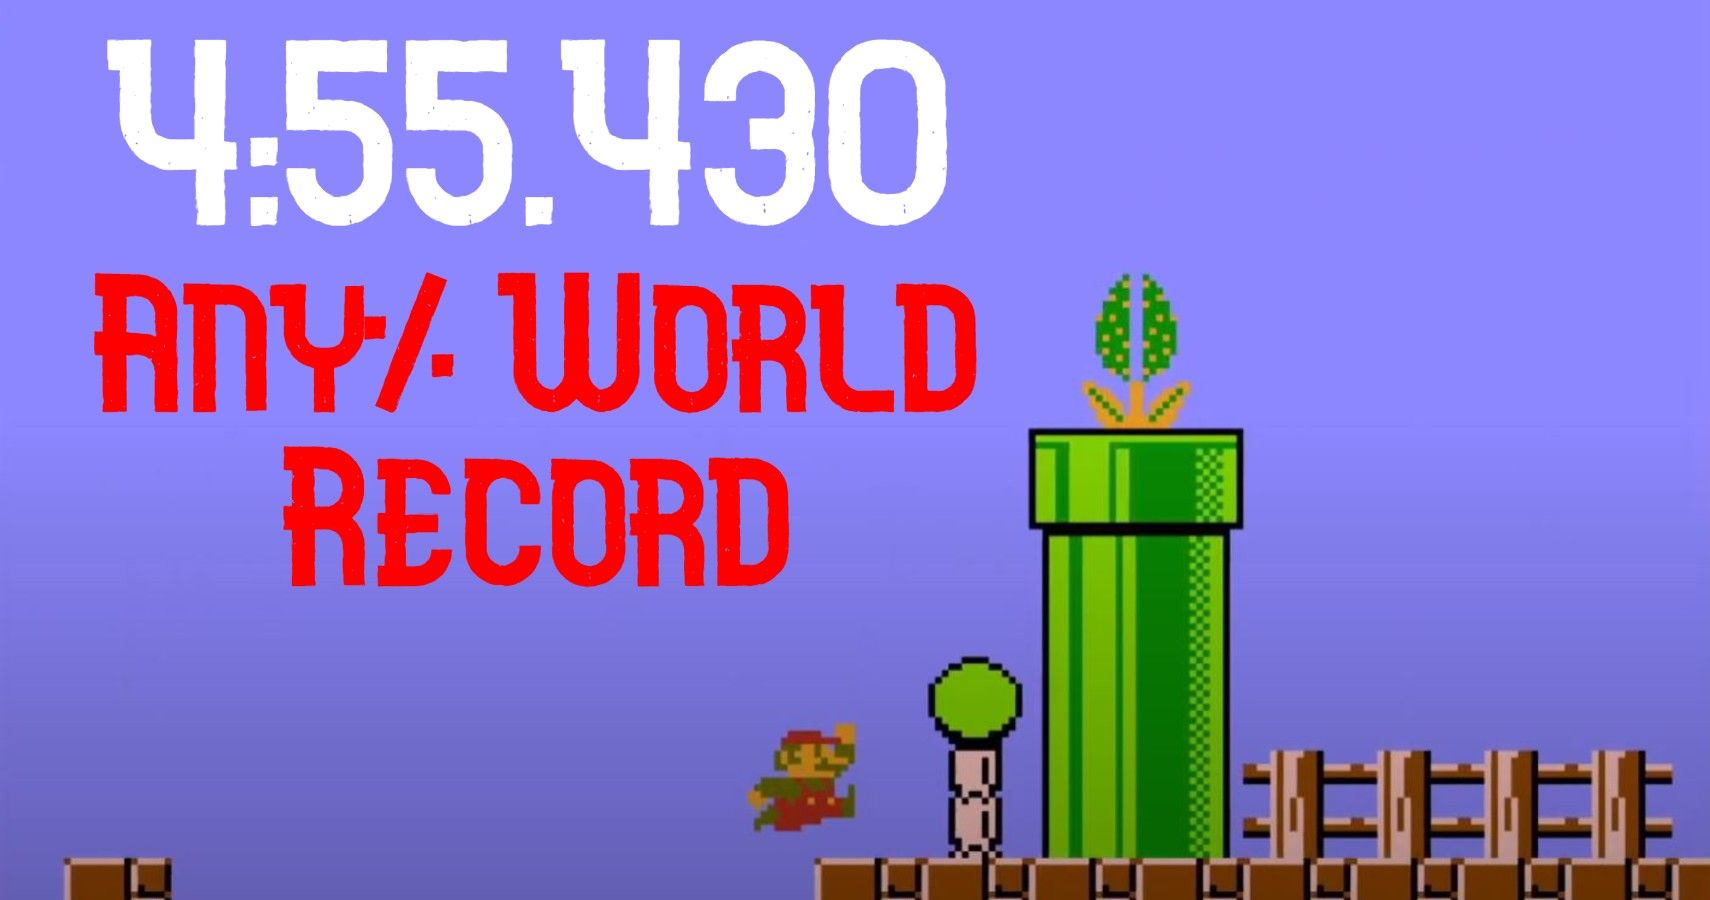 super mario bros 1-1 world record